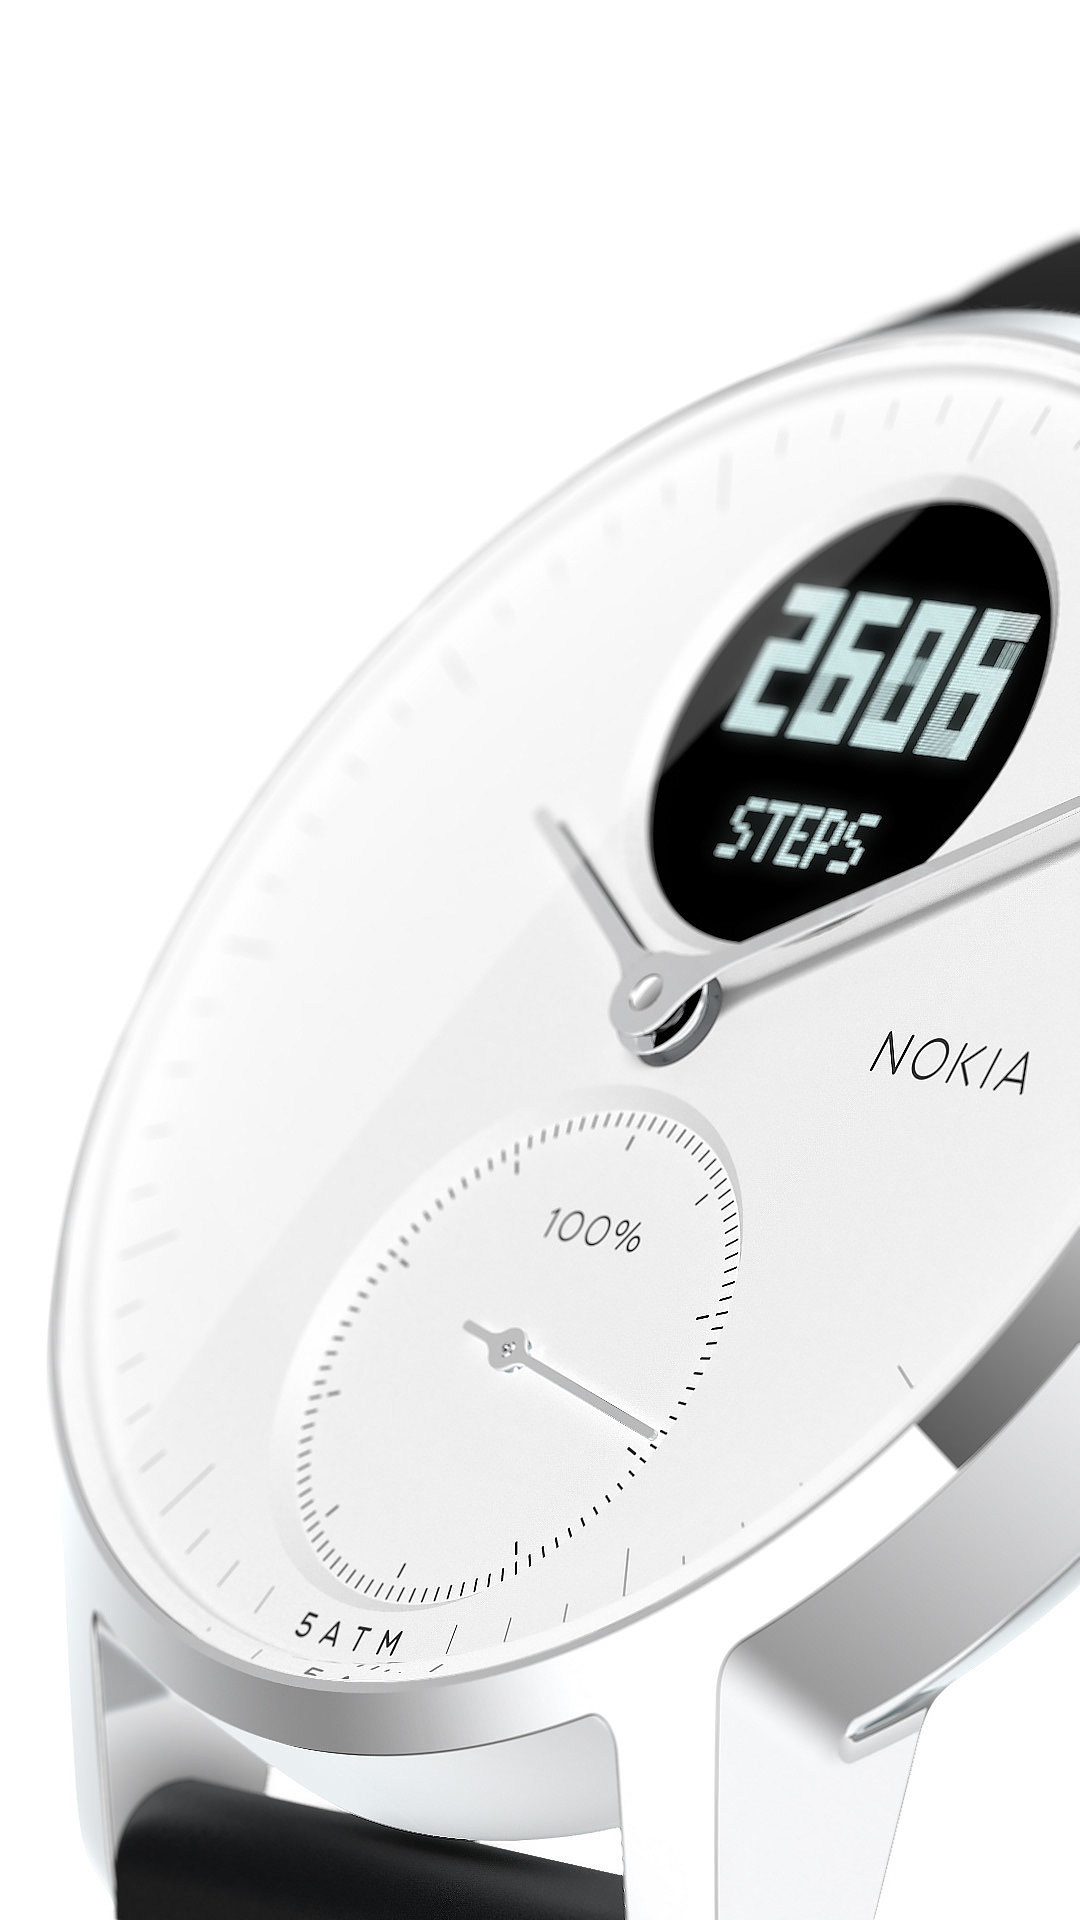 Nokia Steel，手表，智能，